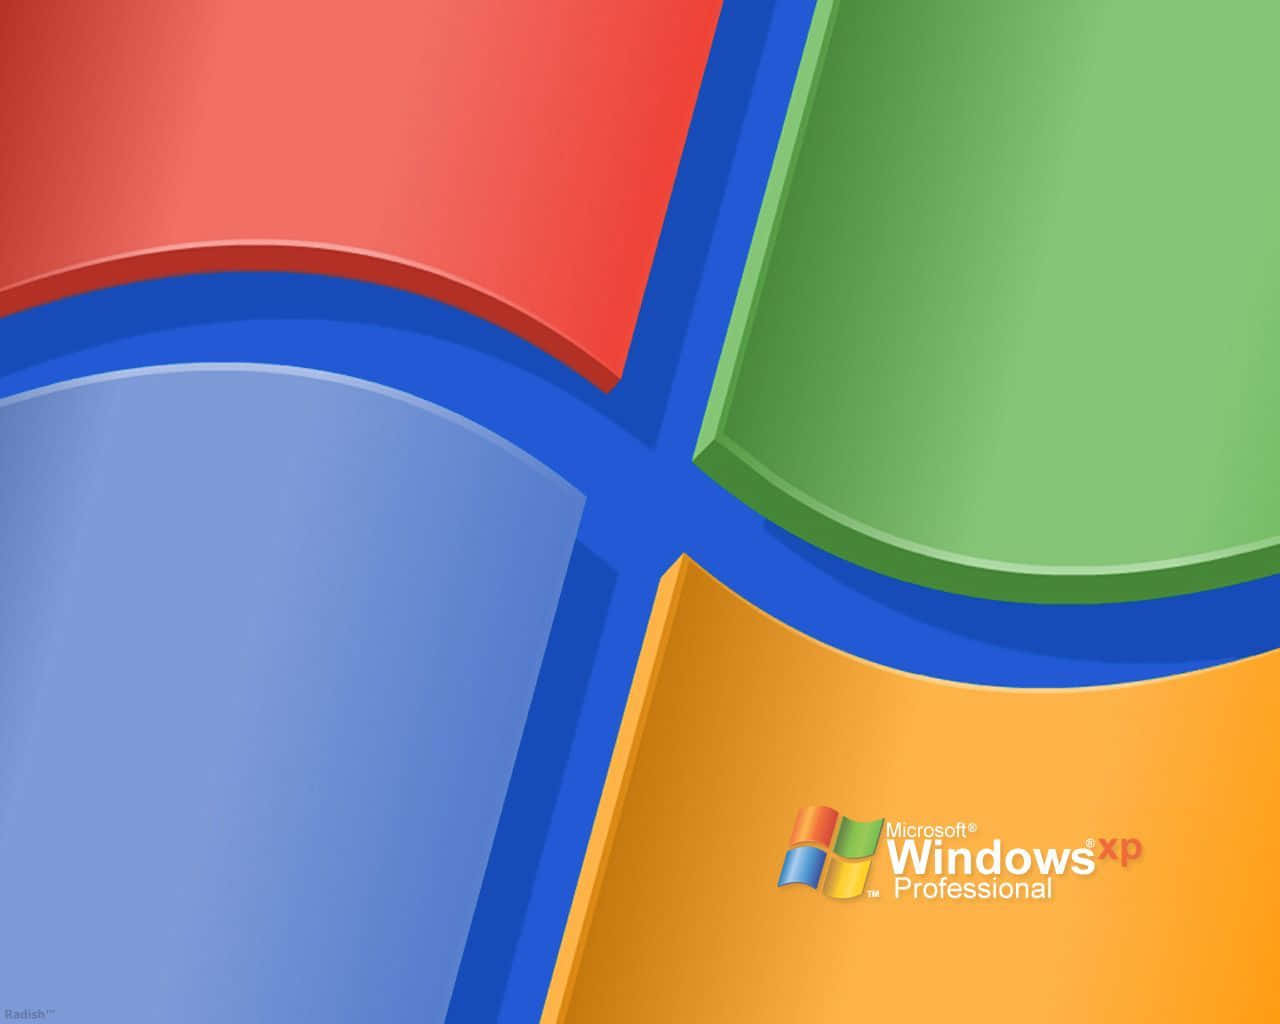 Experience the Nostalgic Design of Windows XP